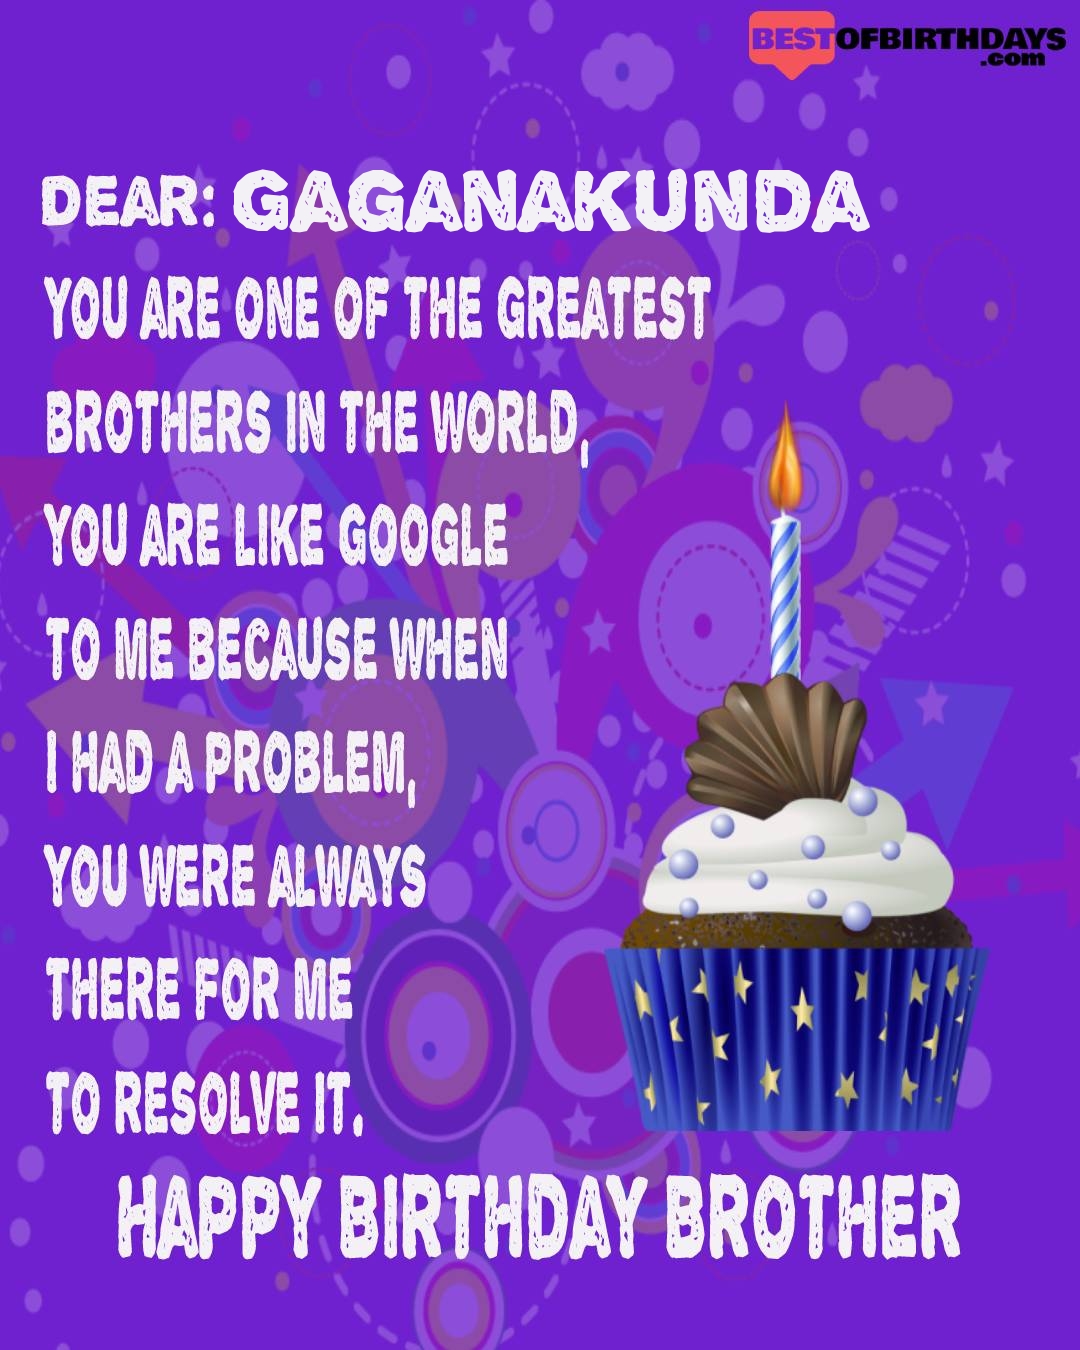 Happy birthday gaganakunda bhai brother bro